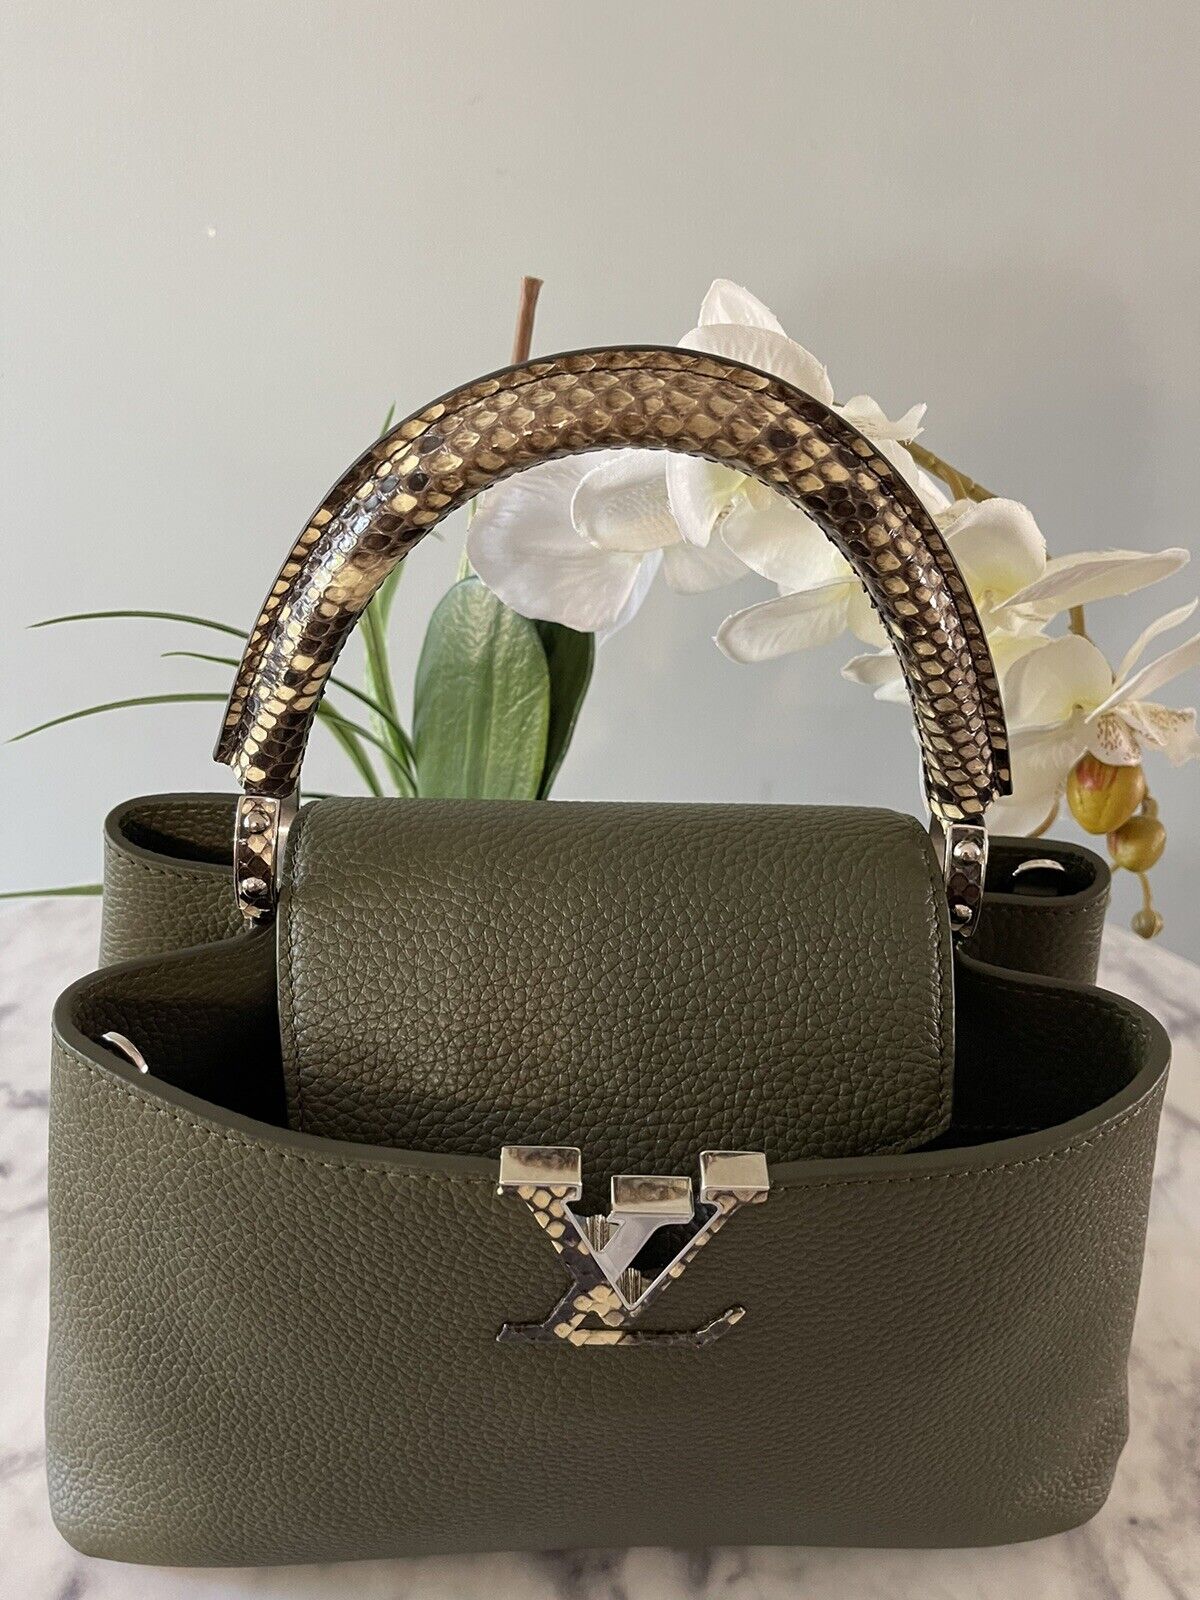 Louis Vuitton Capucines Handbag 401709